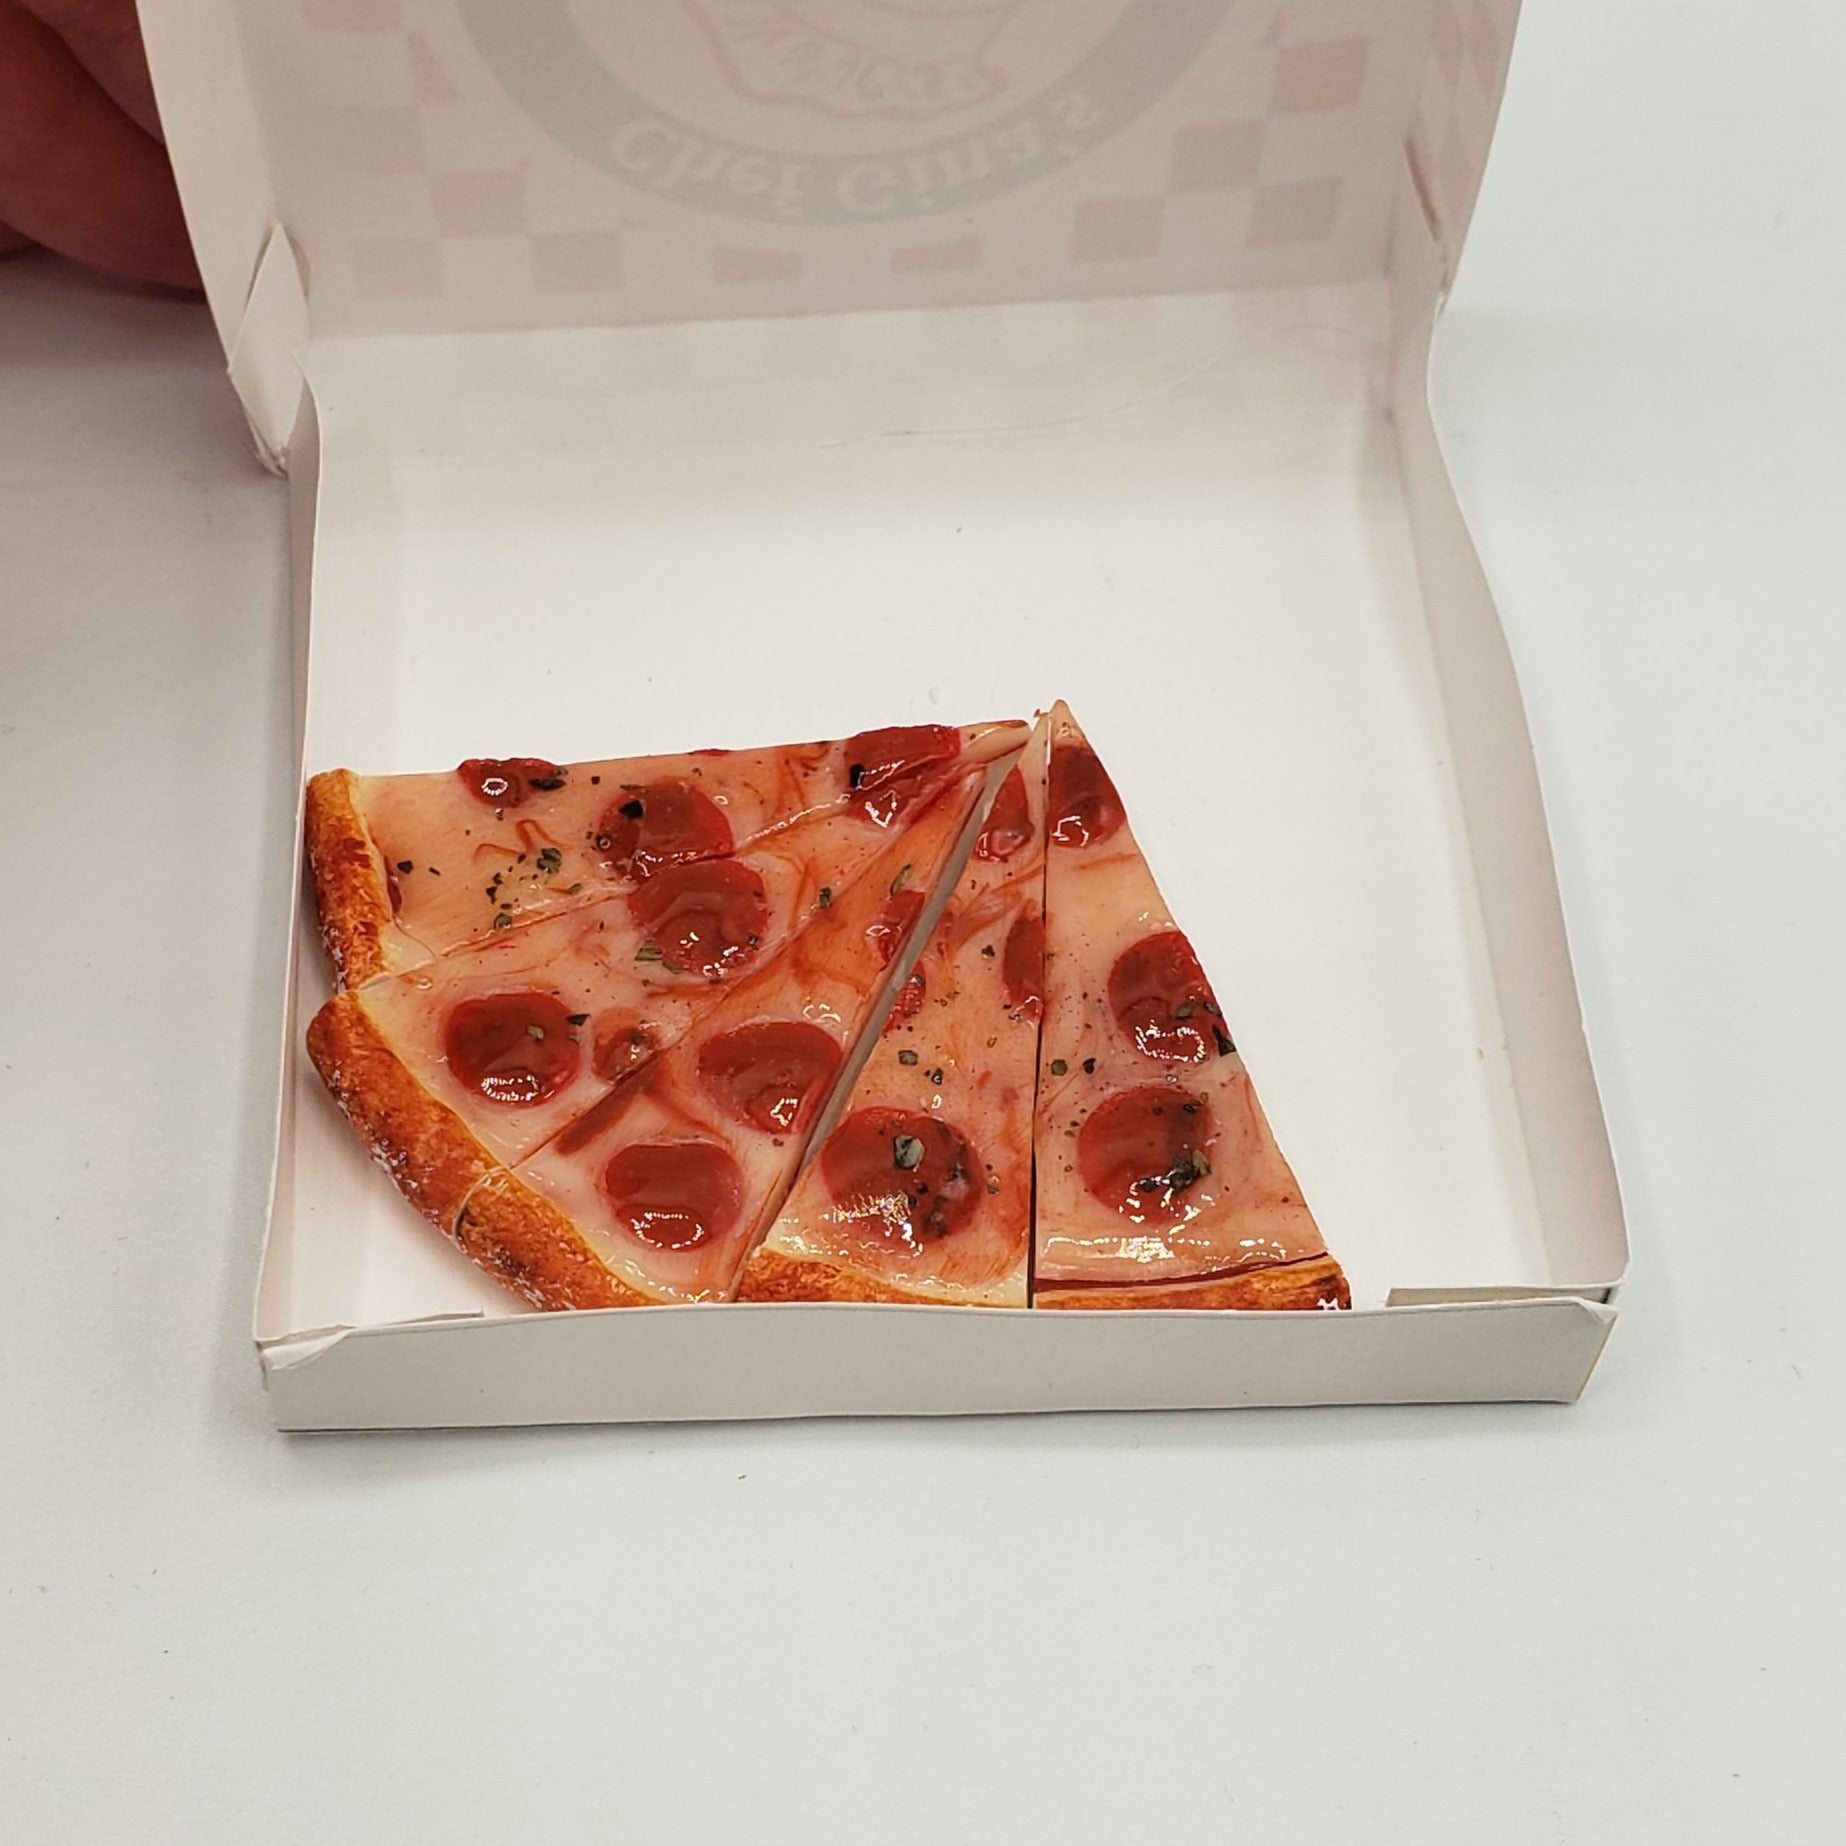 5 slice pepperoni pizza